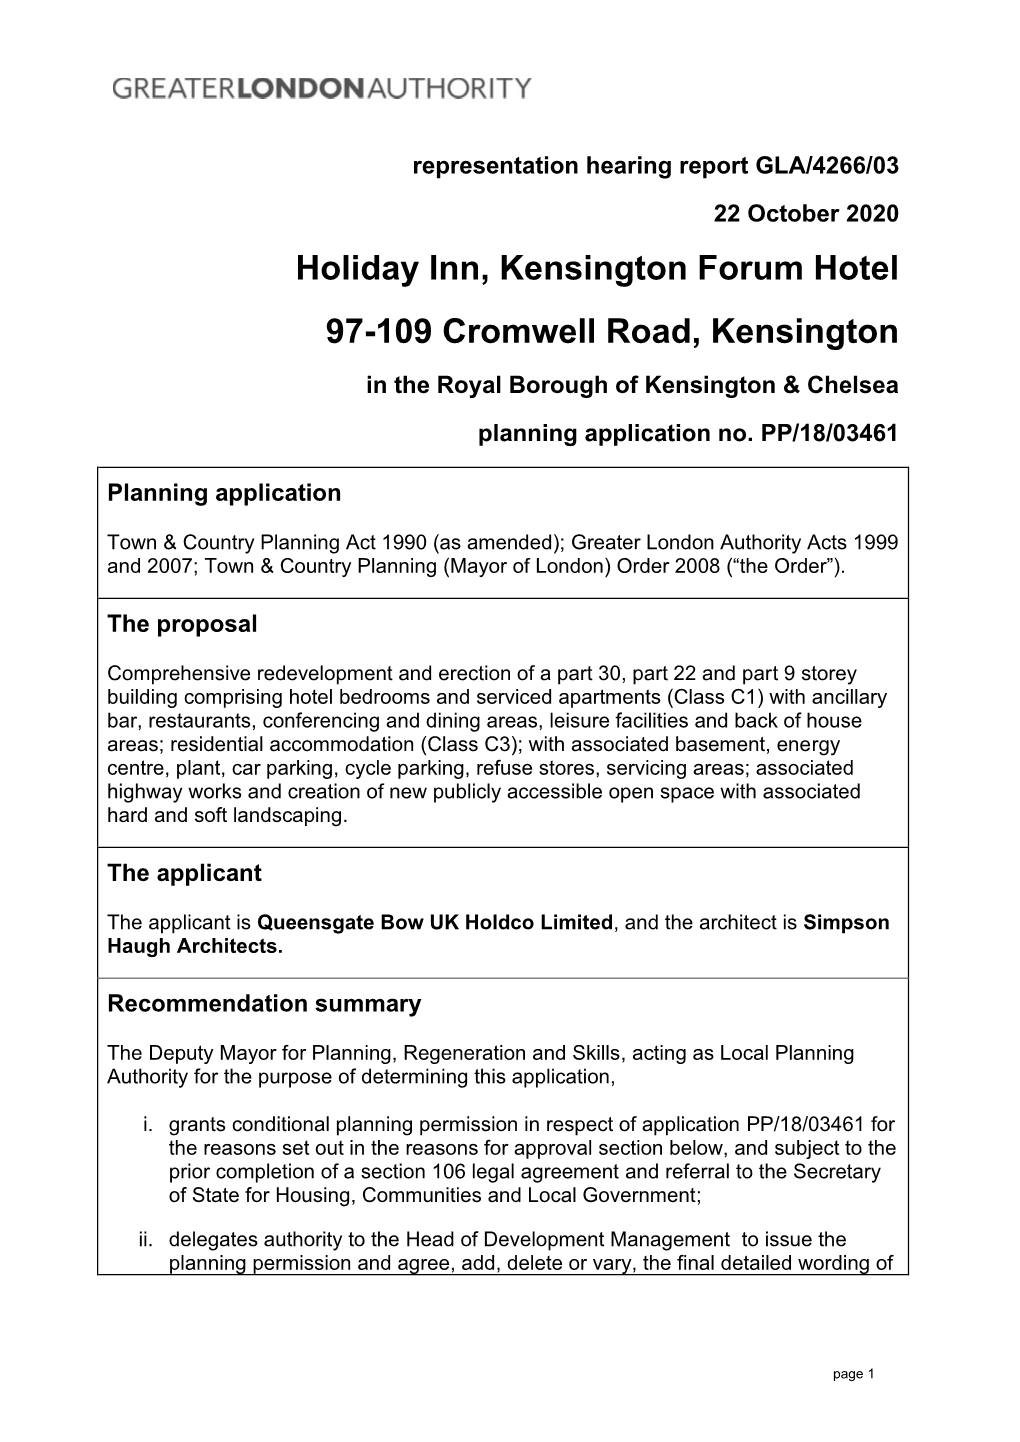 Holiday Inn, Kensington Forum Hotel 97-109 Cromwell Road, Kensington in the Royal Borough of Kensington & Chelsea